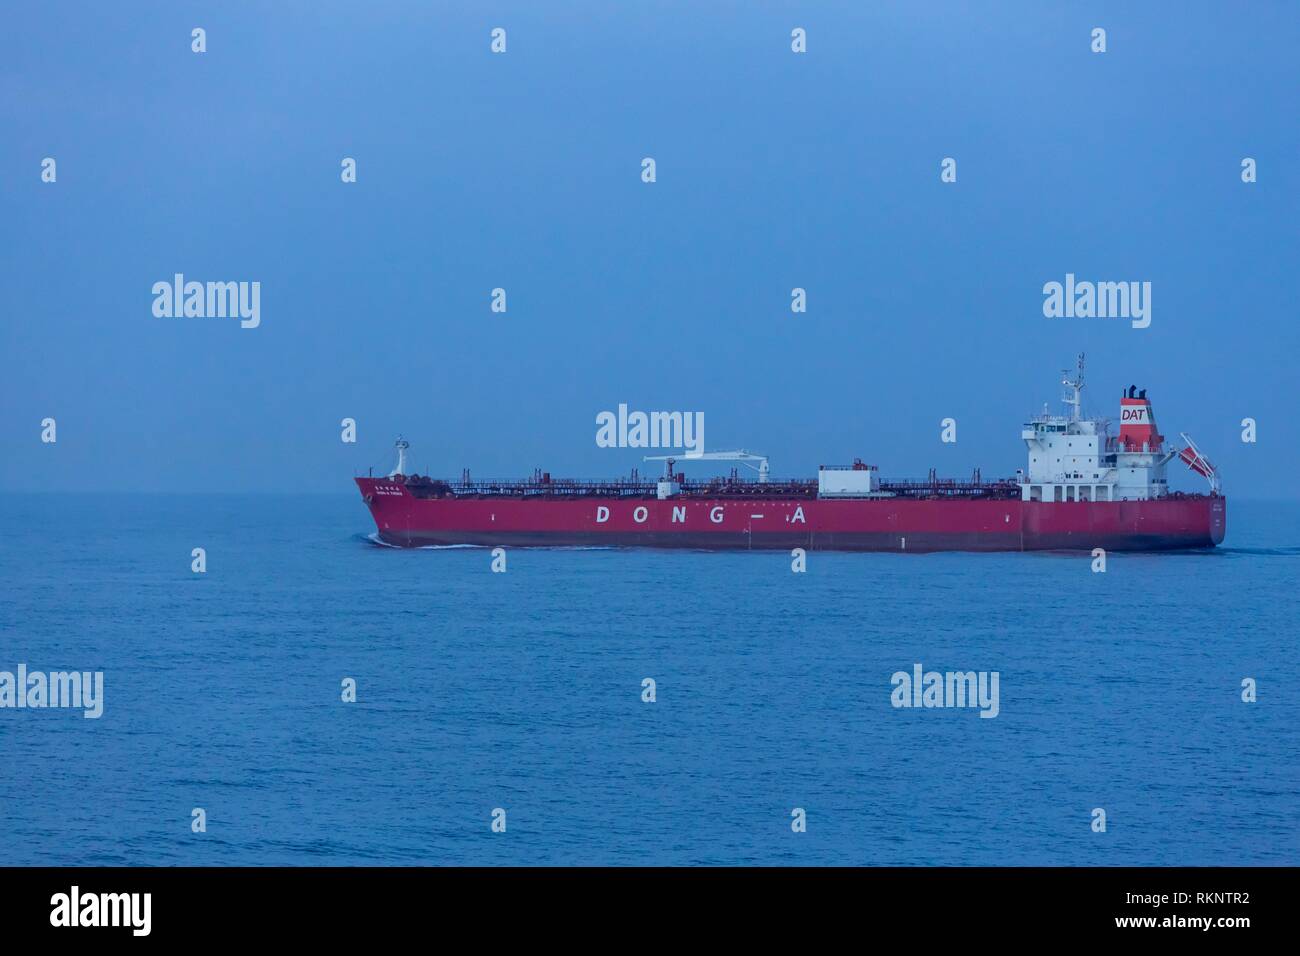 A cargo ship in the South China Sea near Japan. Stock Photo